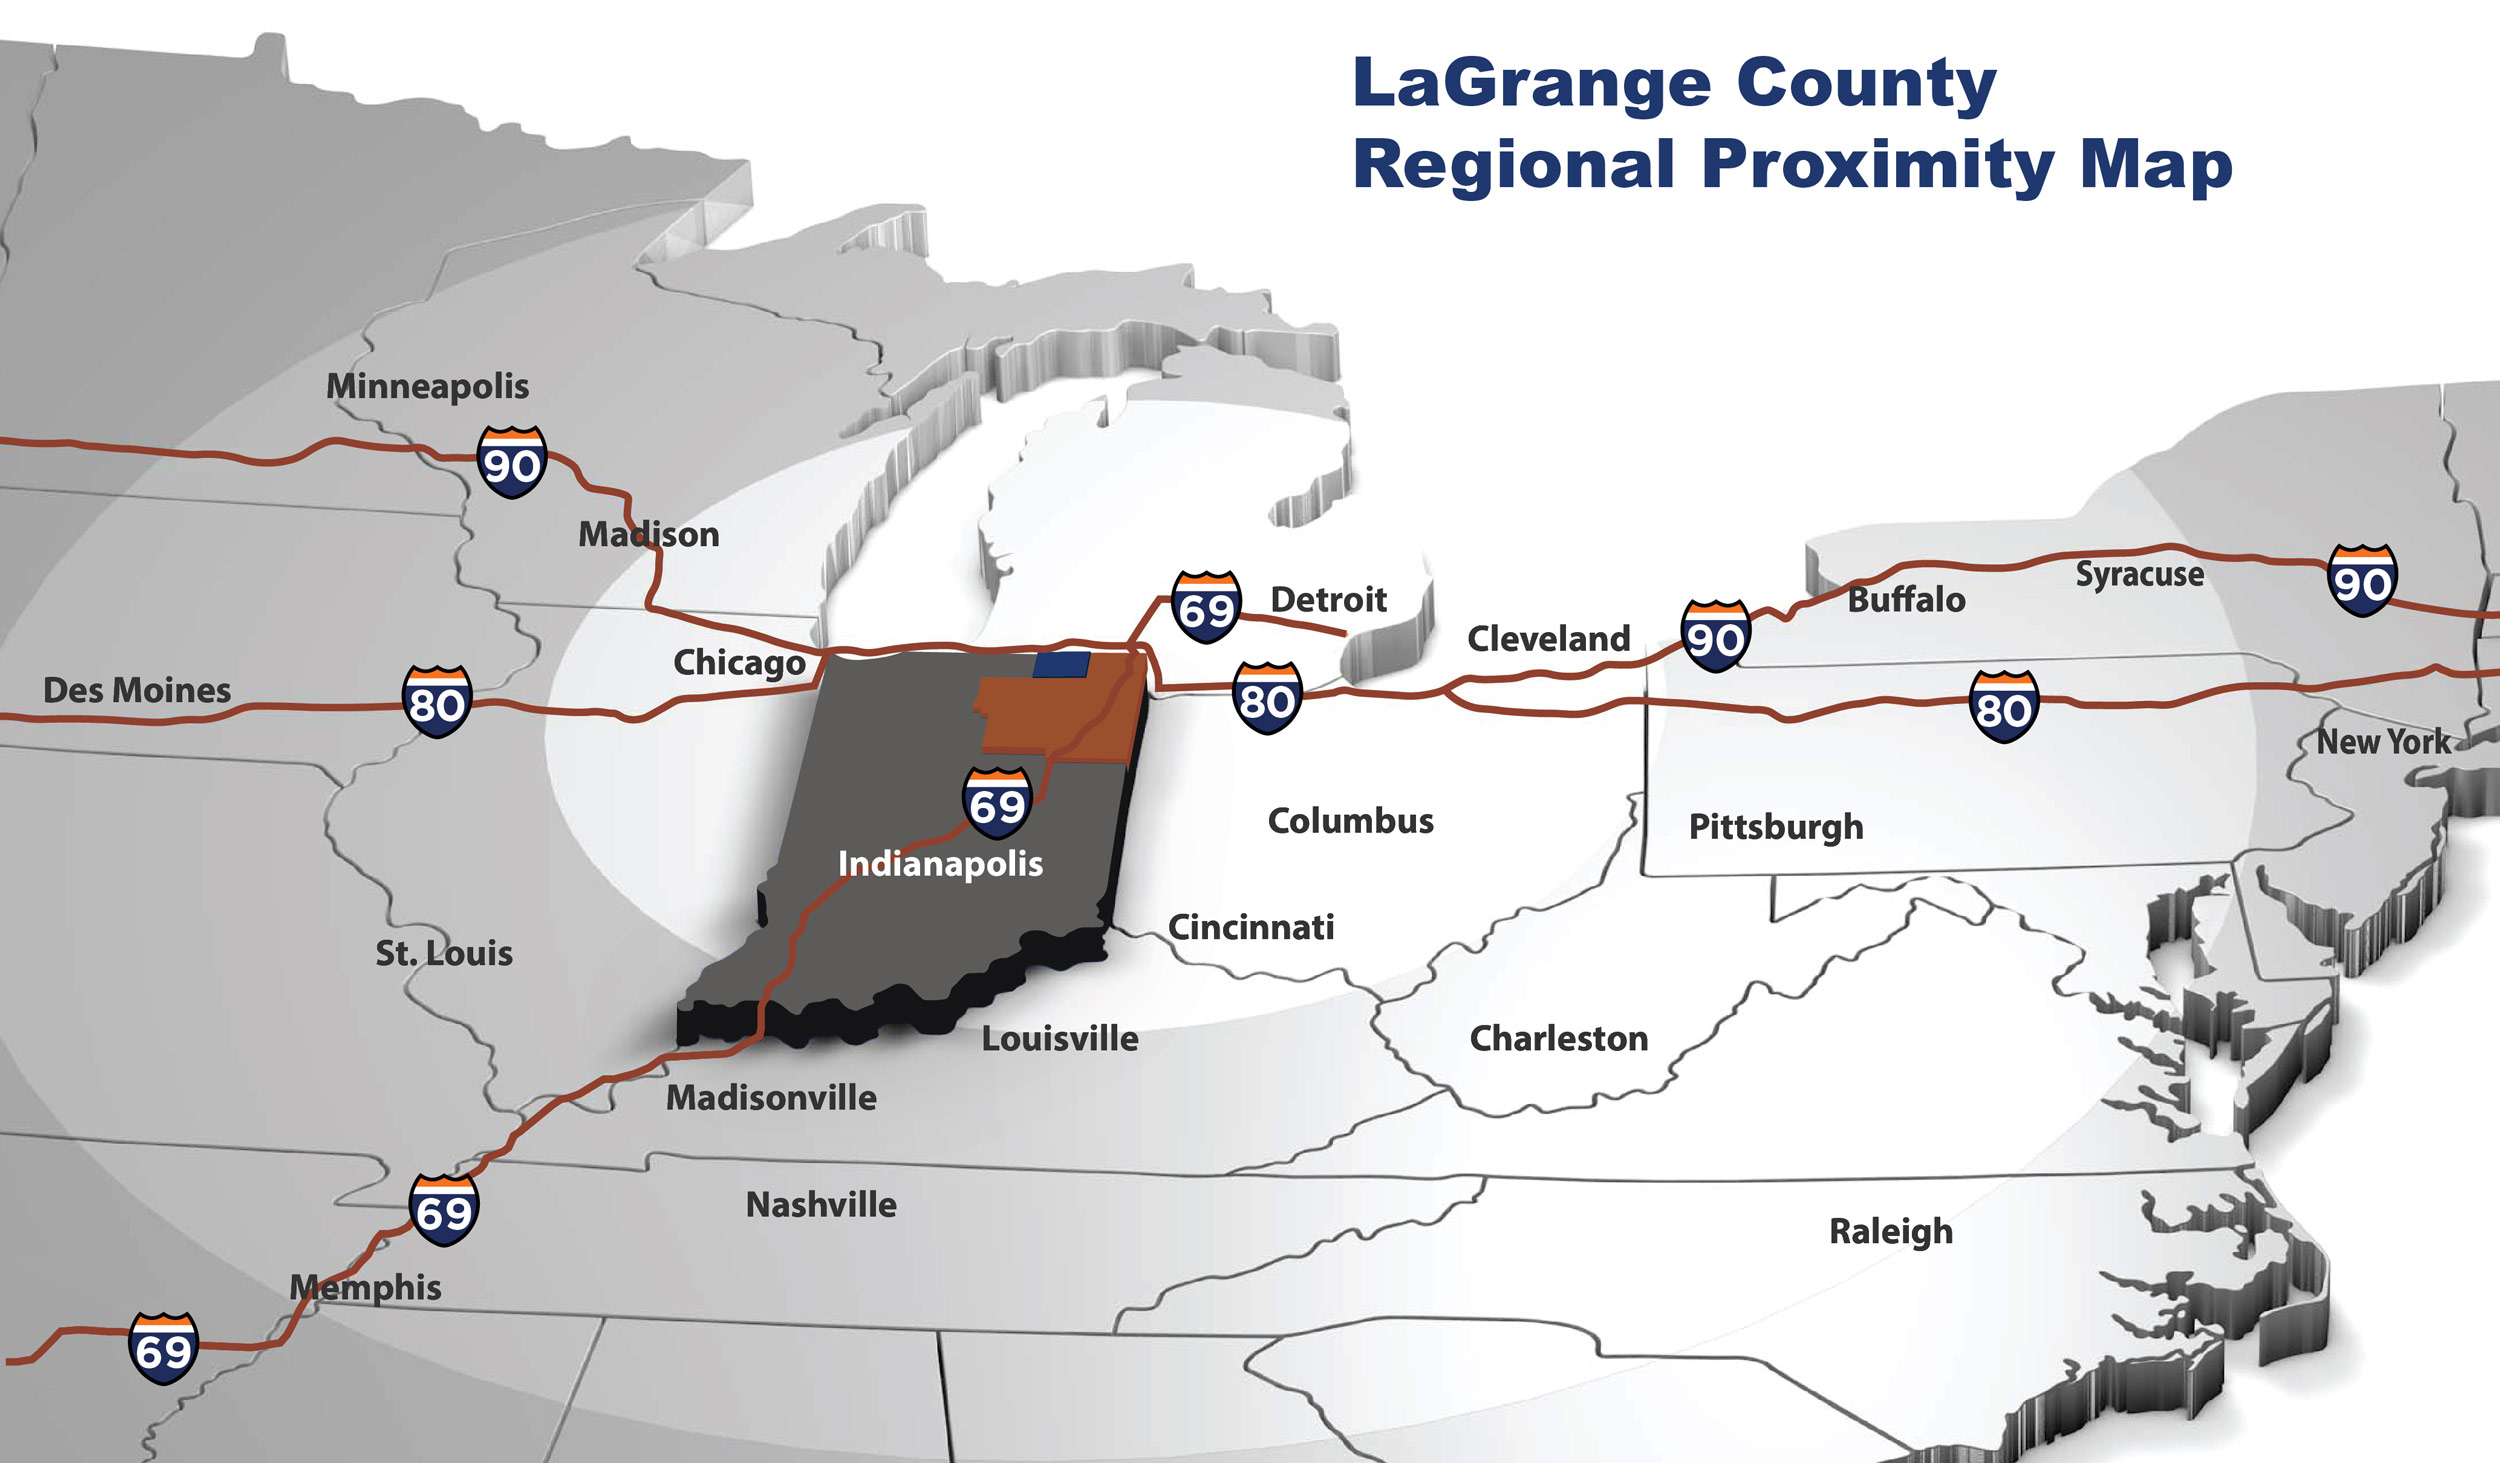 Regional Proximity Map of LaGrange County, Indiana